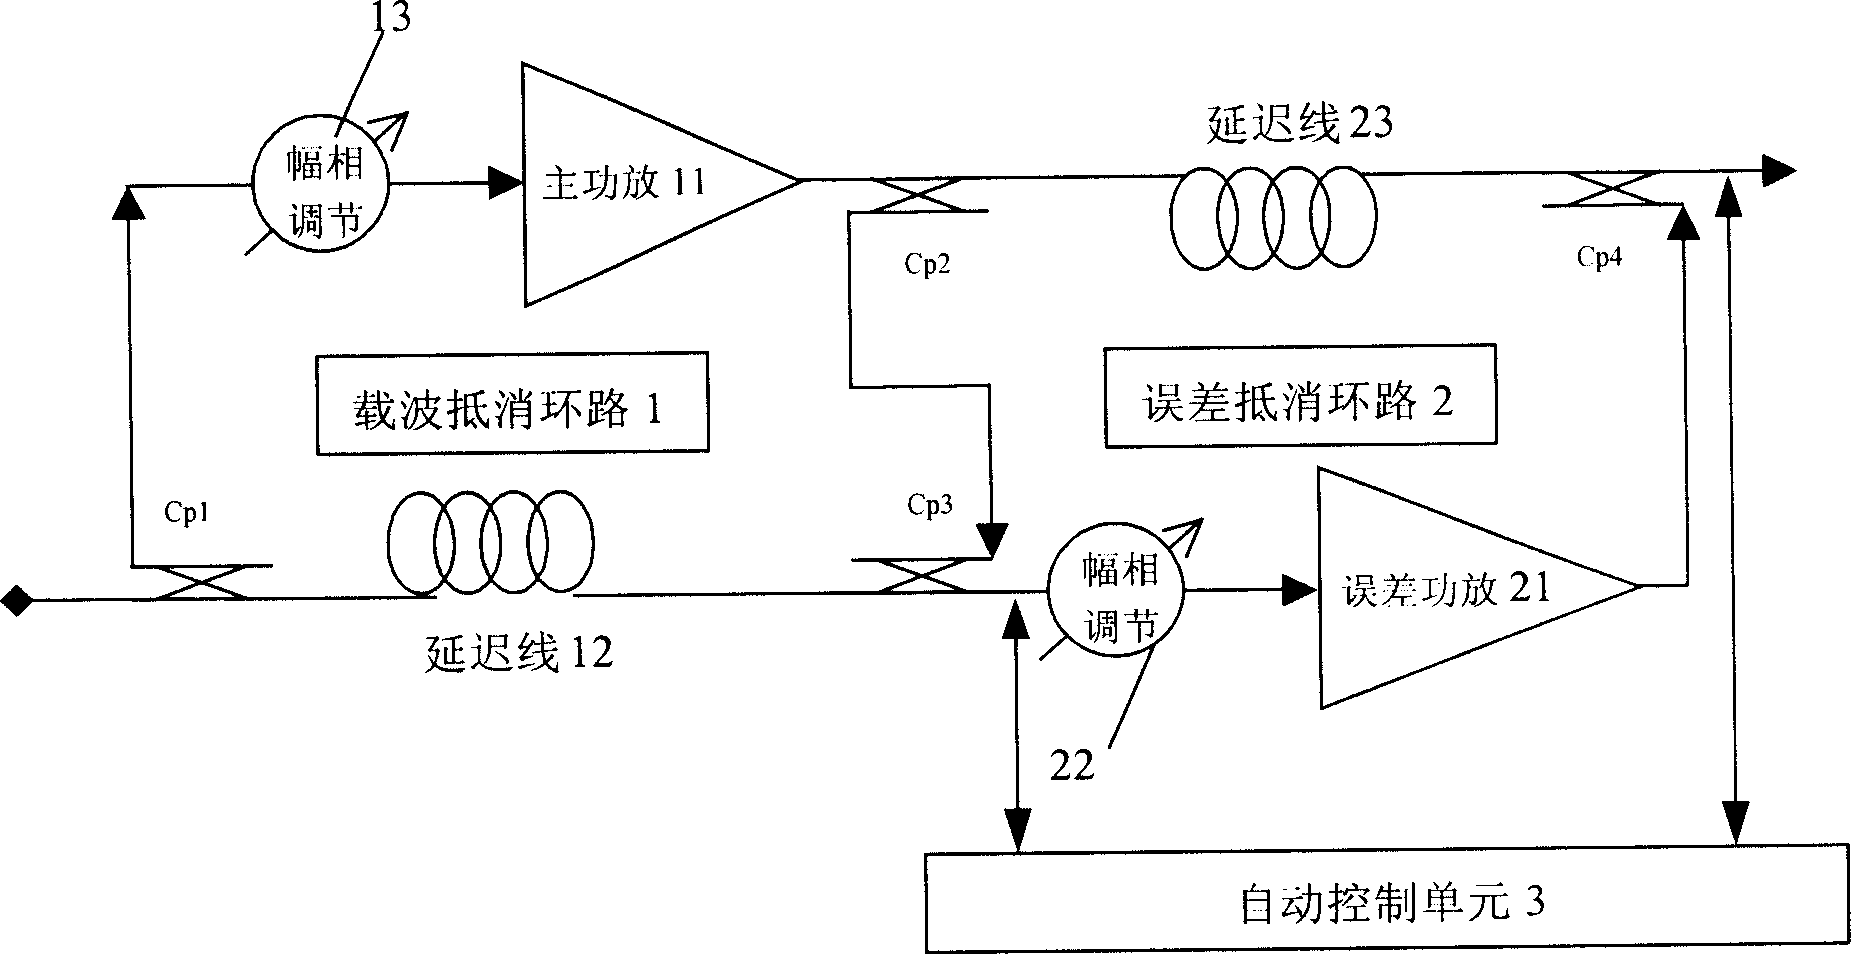 Method for increasing linearity of feedforward power amplifier using carrier leakage effect